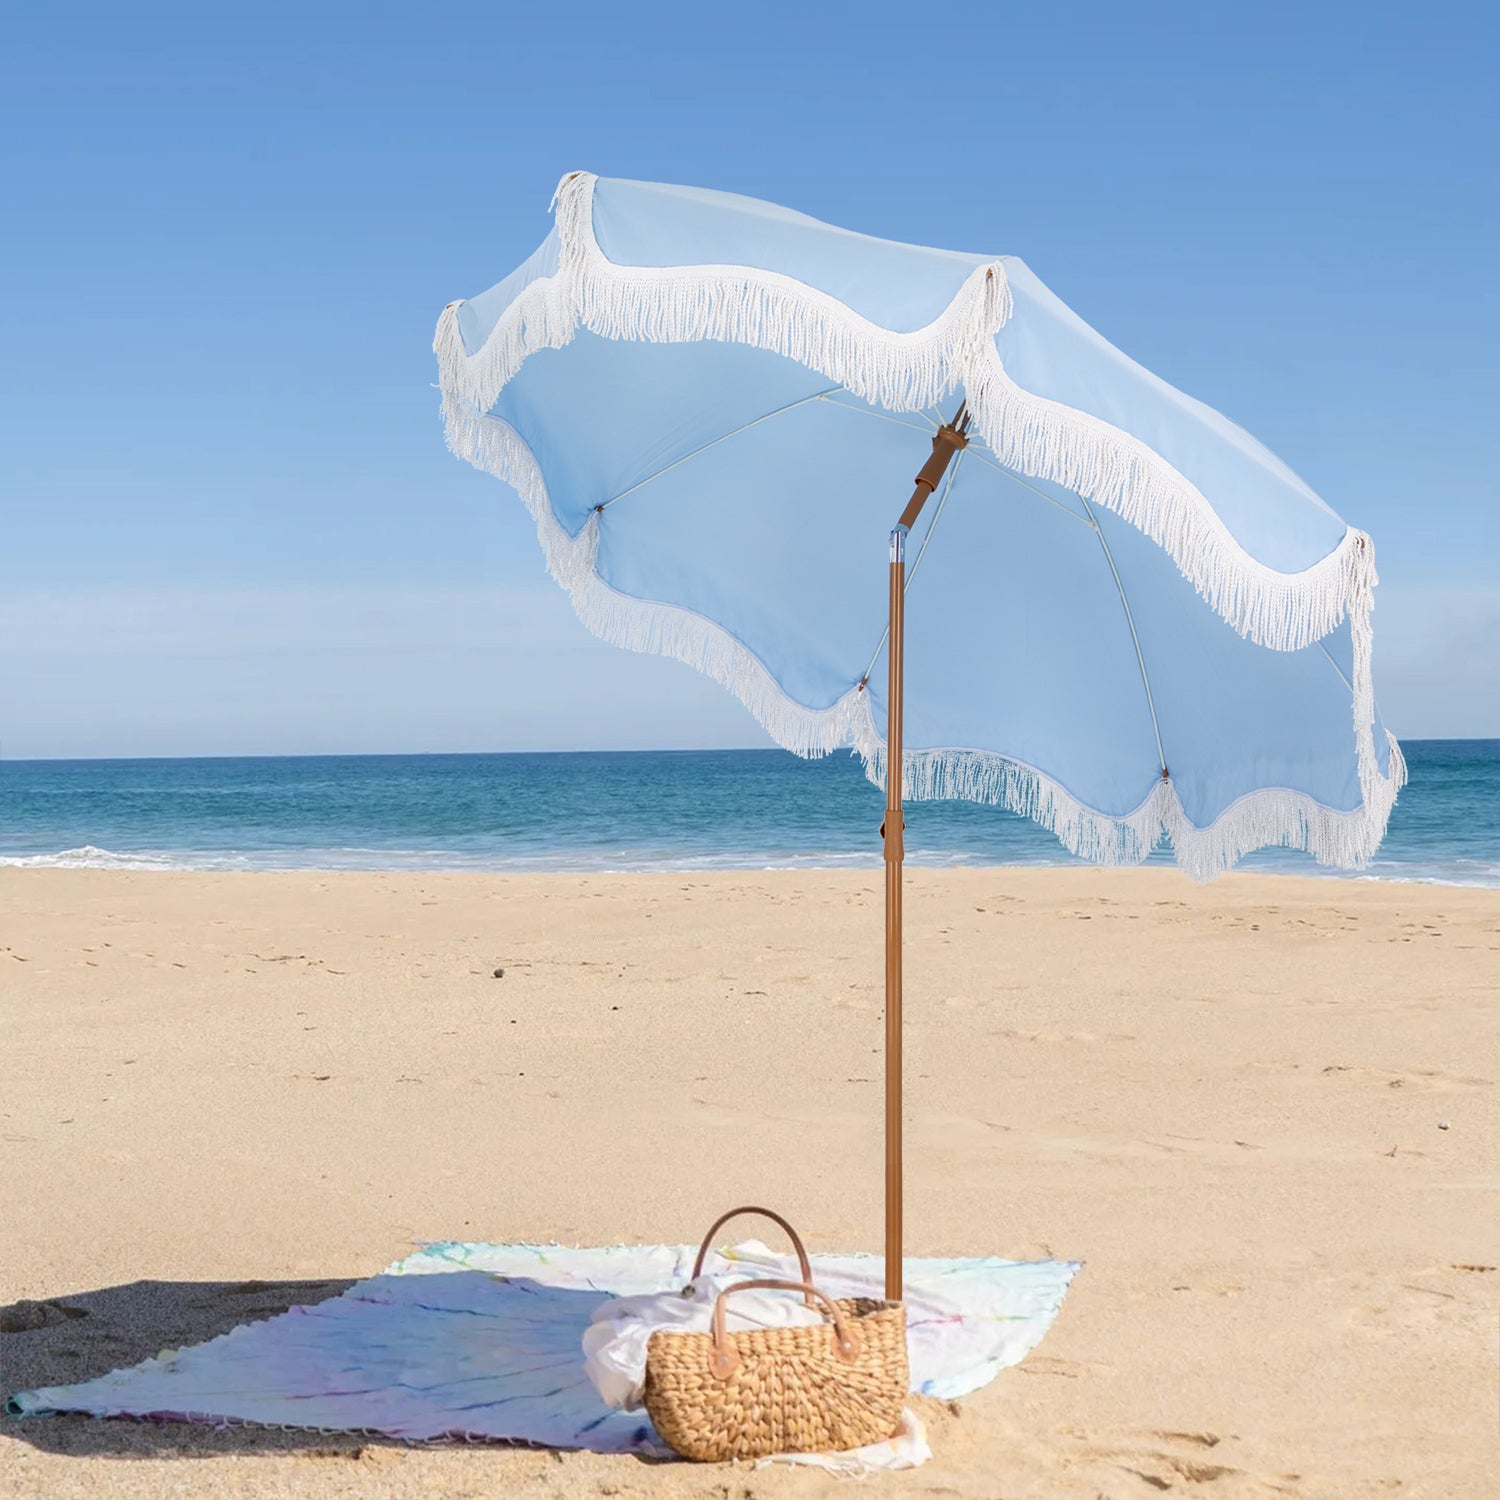 PHI VILLA 7ft Auto-Tilt Beach Tassel Umbrella With Handy Carry Bags